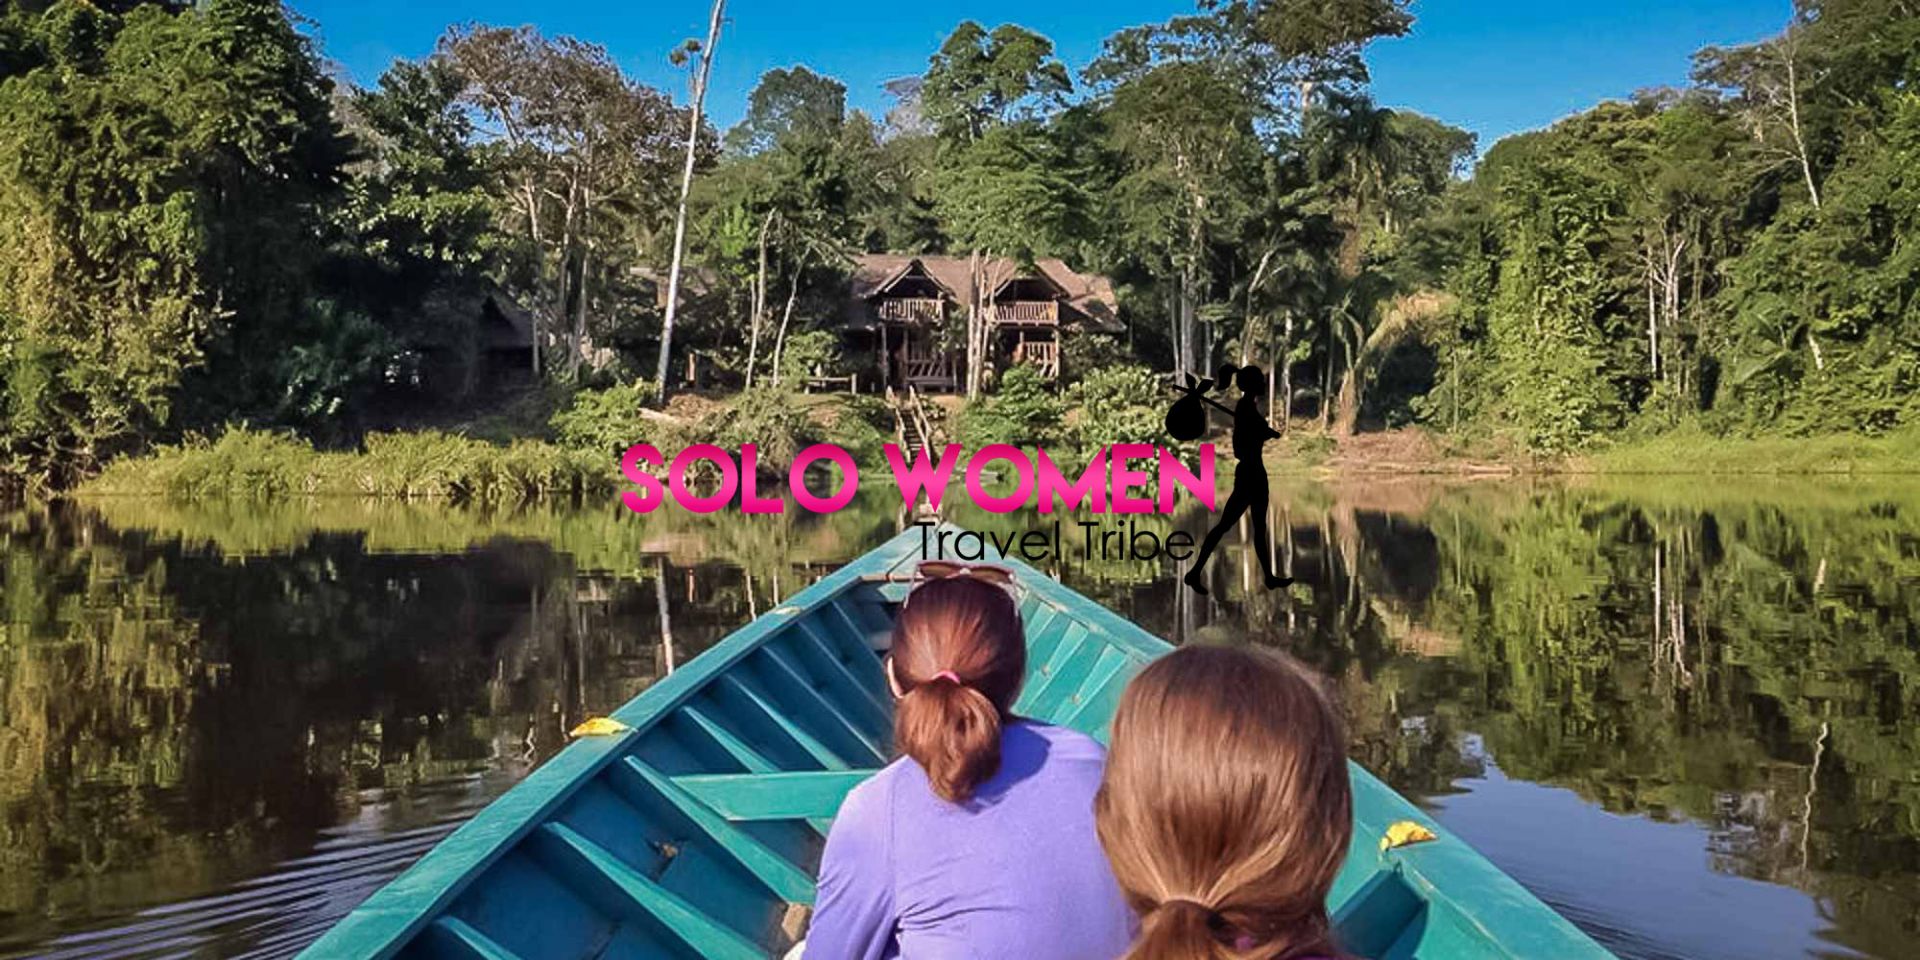 Solo Women Travel Tribe Amazon Jungle tour